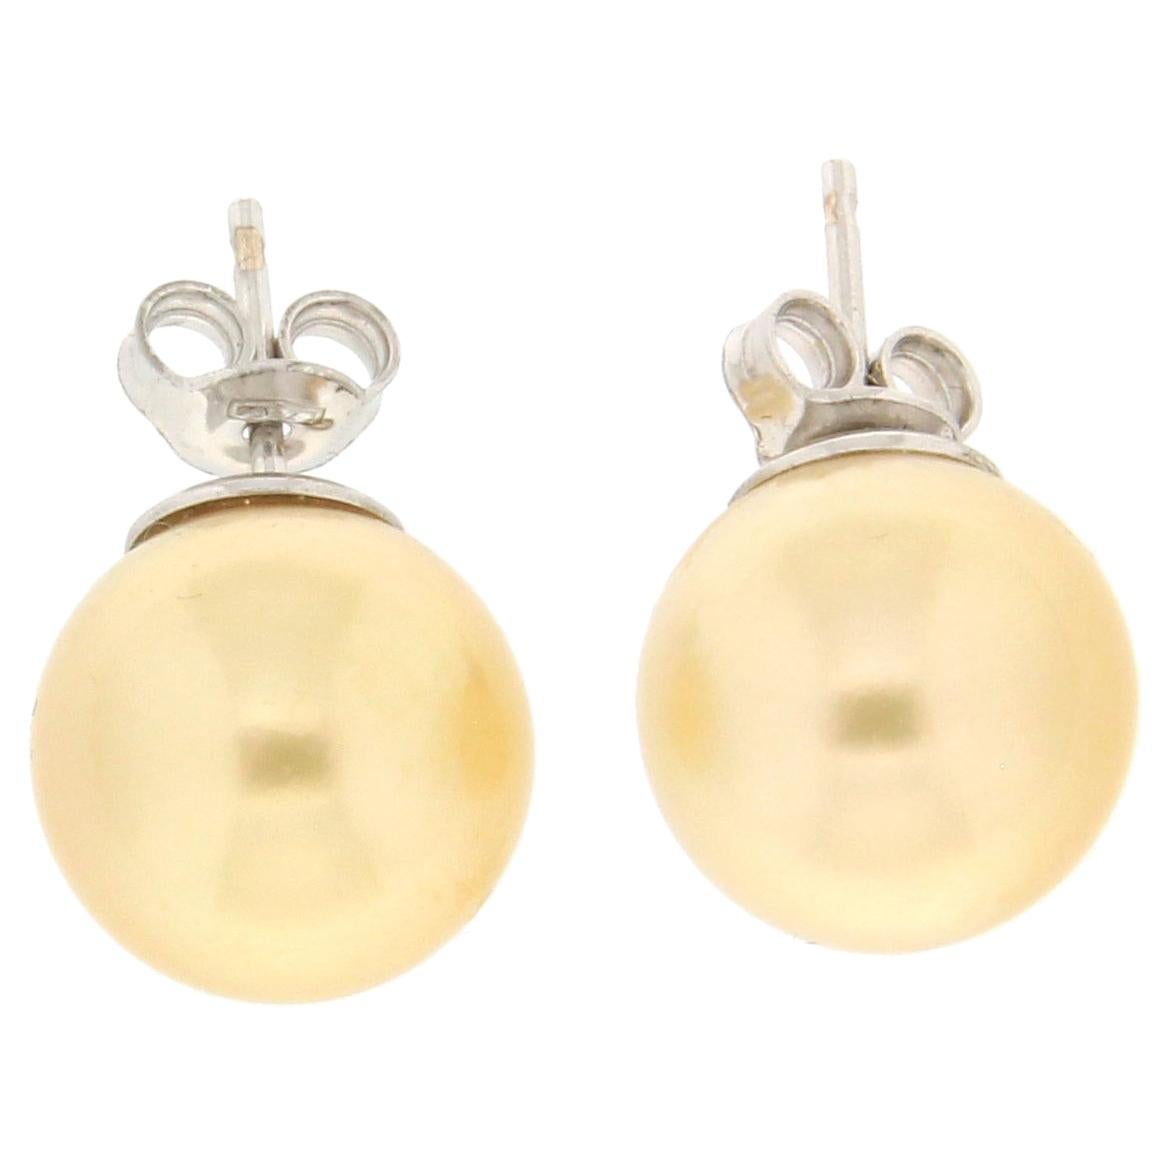 Handcraft Pearls 18 Karat White Gold Stud Earrings